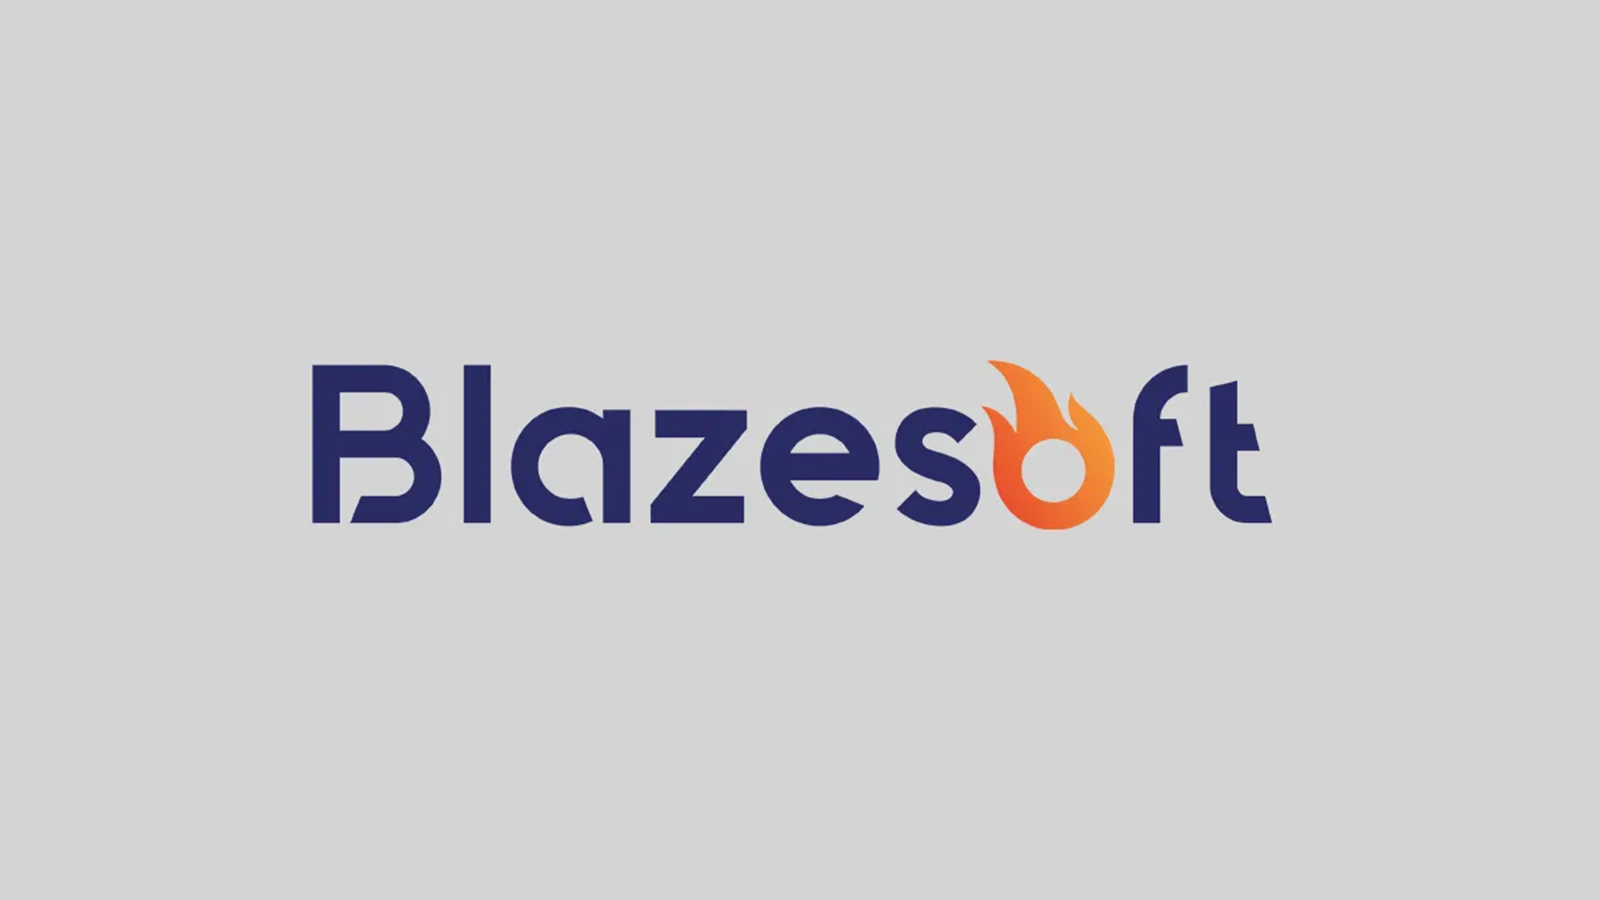 Blazesoft Three New Partnerships